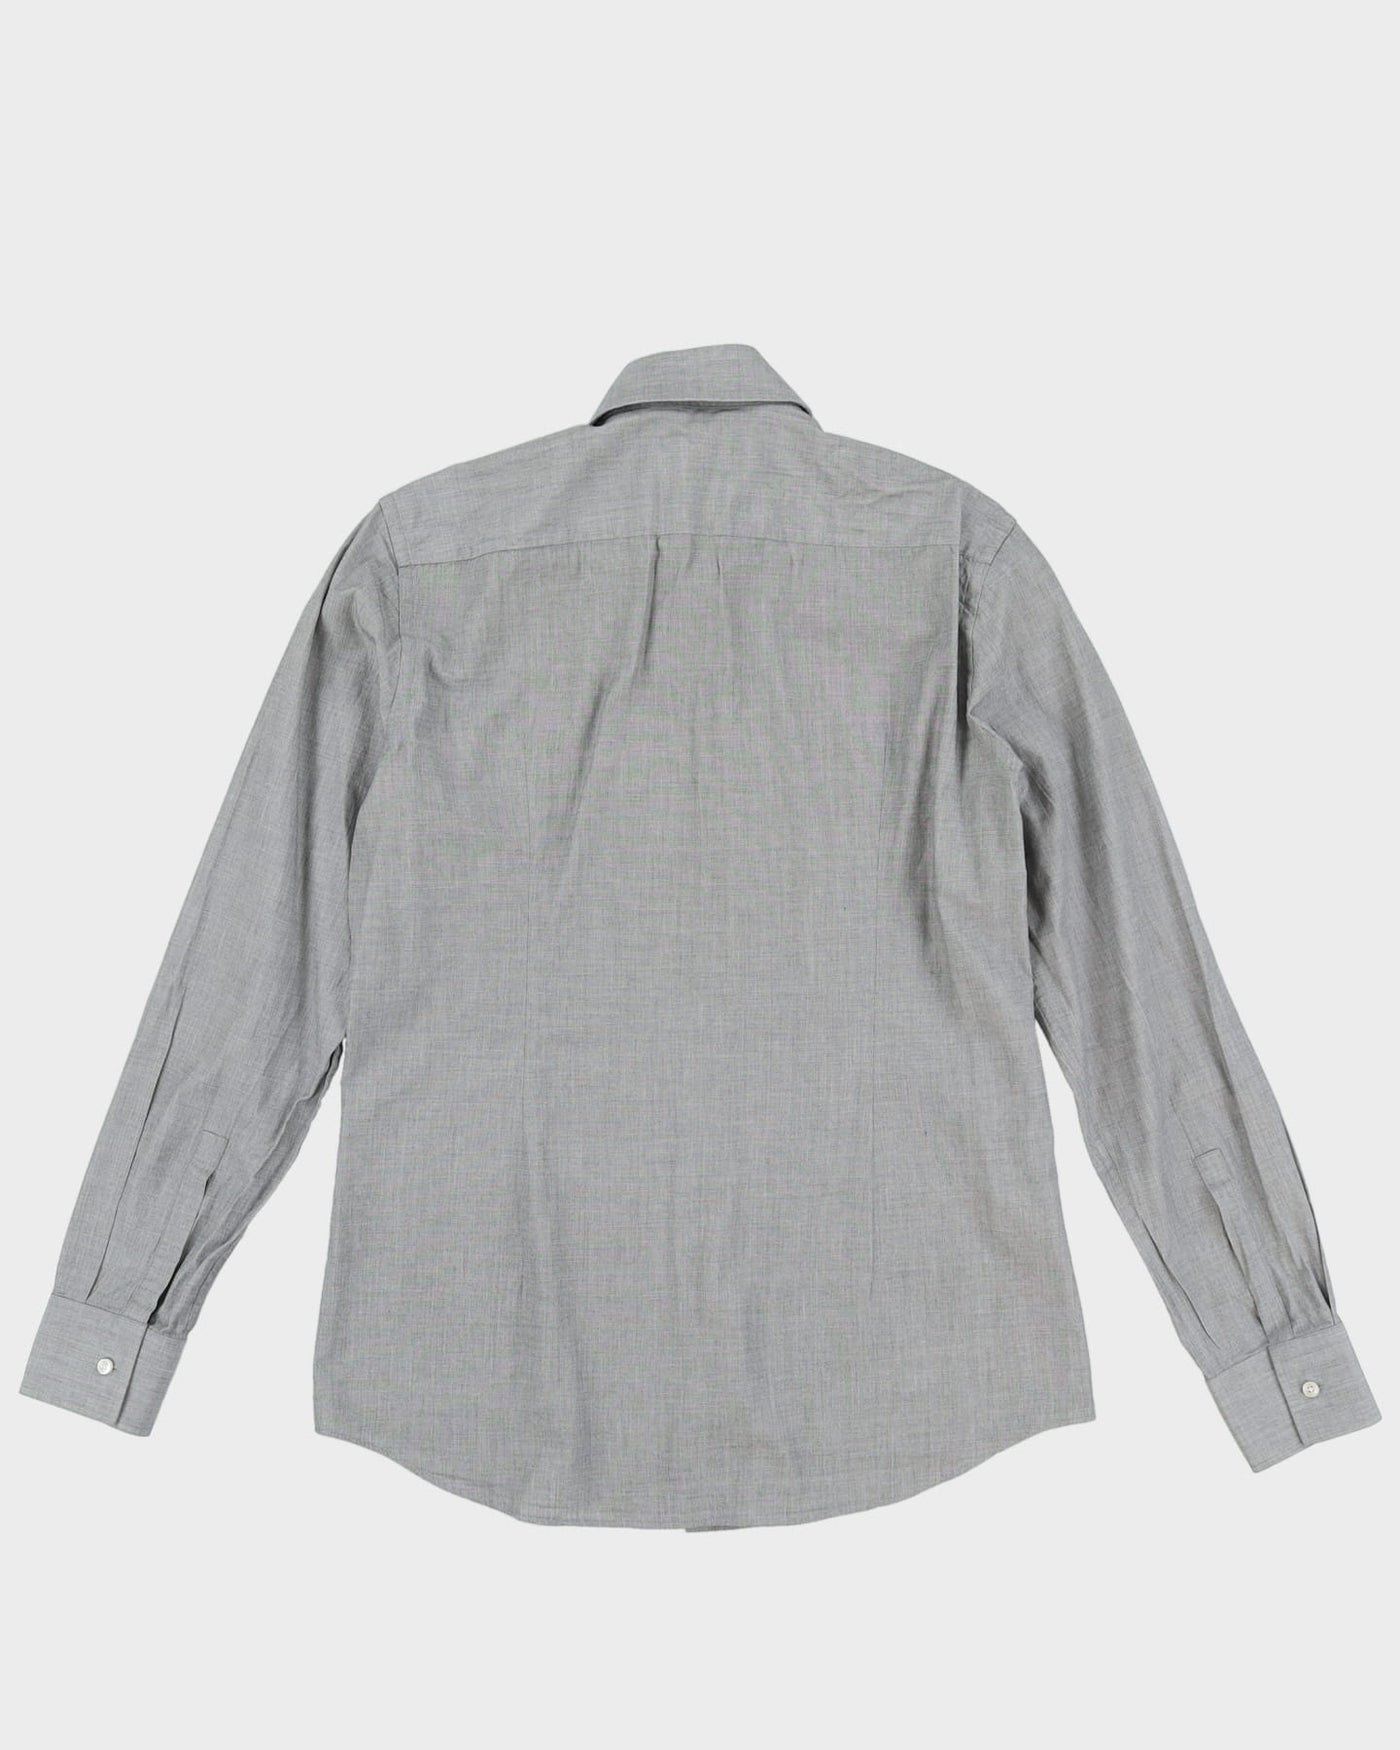 Hugo Boss Slim Fit Grey Button Up Long Sleeve Shirt - M